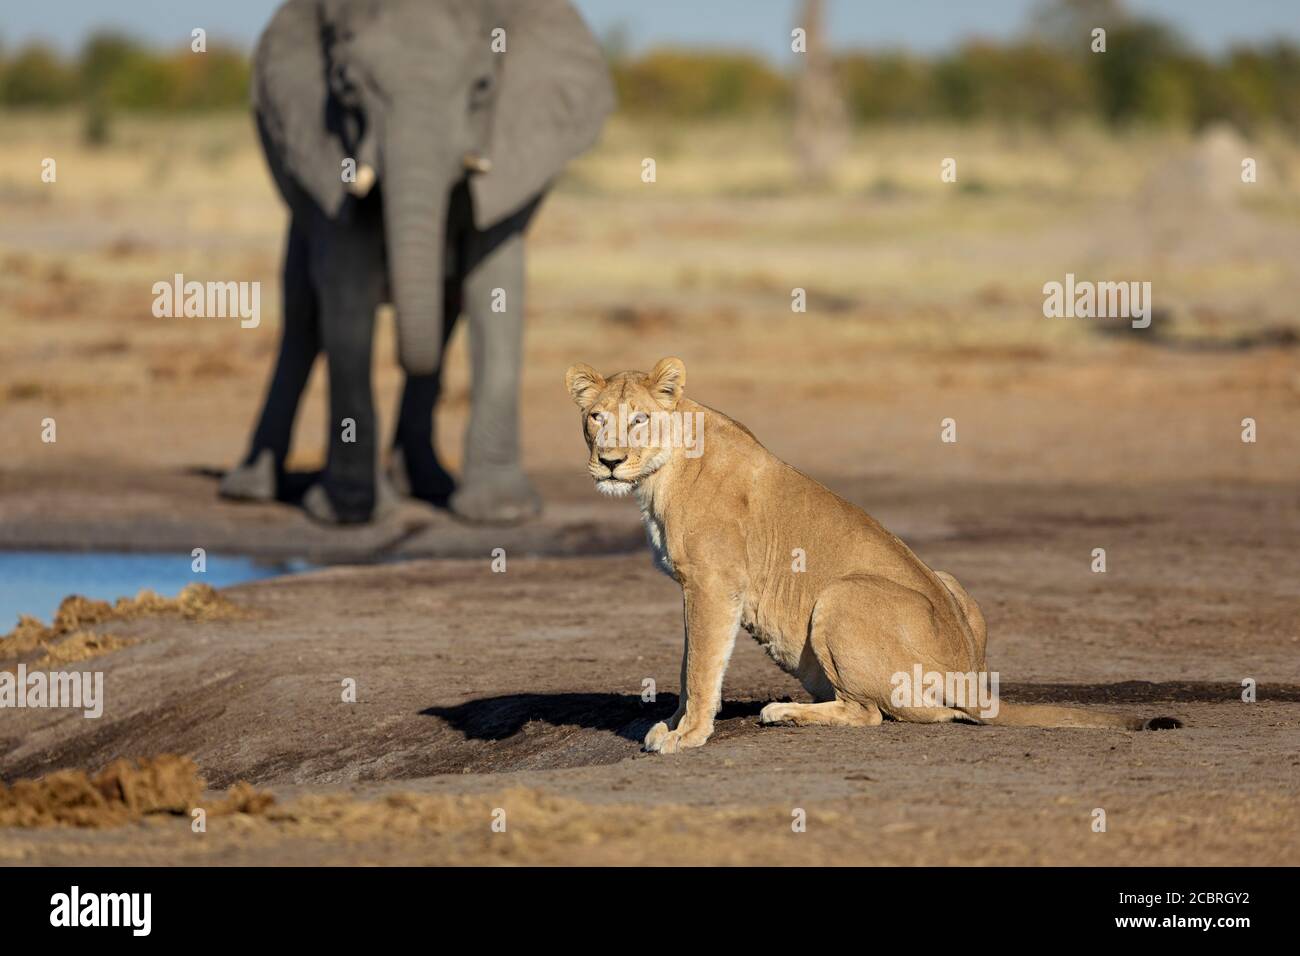 La Leona de la sacristía mirando la alerta de la cámara con el agua potable del elefante Al fondo en una tarde soleada en Savuti Botsuana Foto de stock